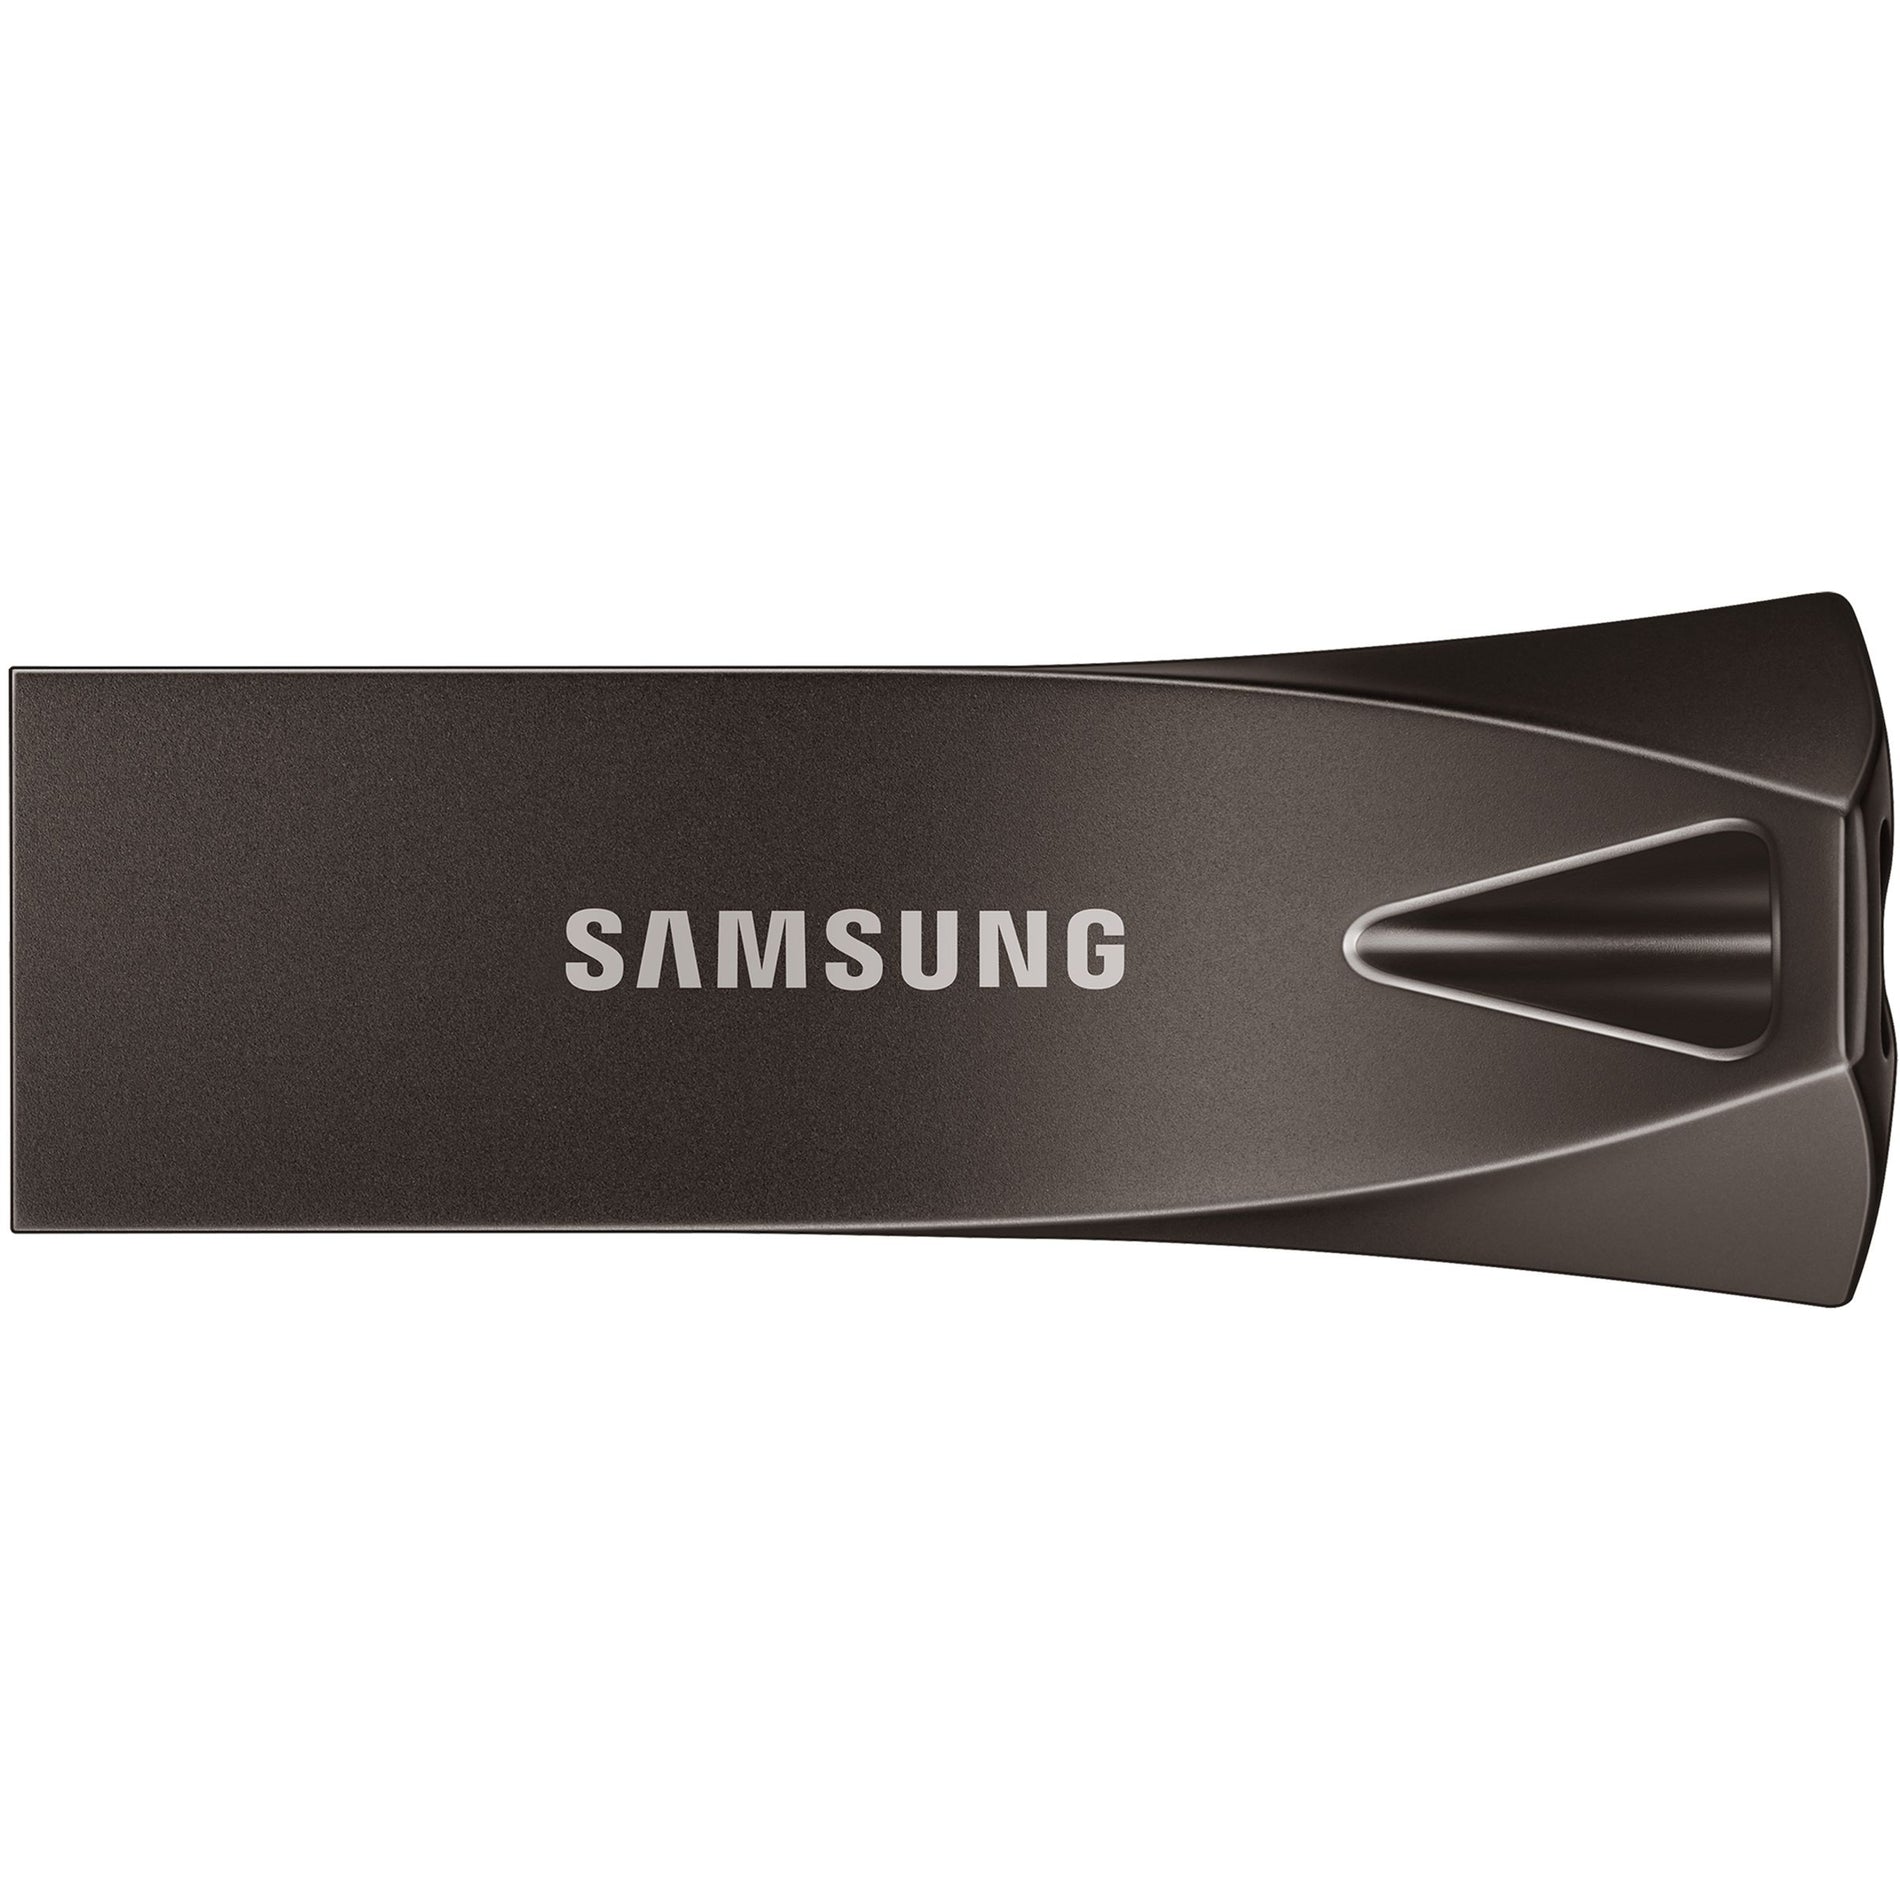 Samsung MUF-256BE4/AM USB 3.1 Flash Drive BAR Plus 256GB Titan Gray 5 Year Warranty